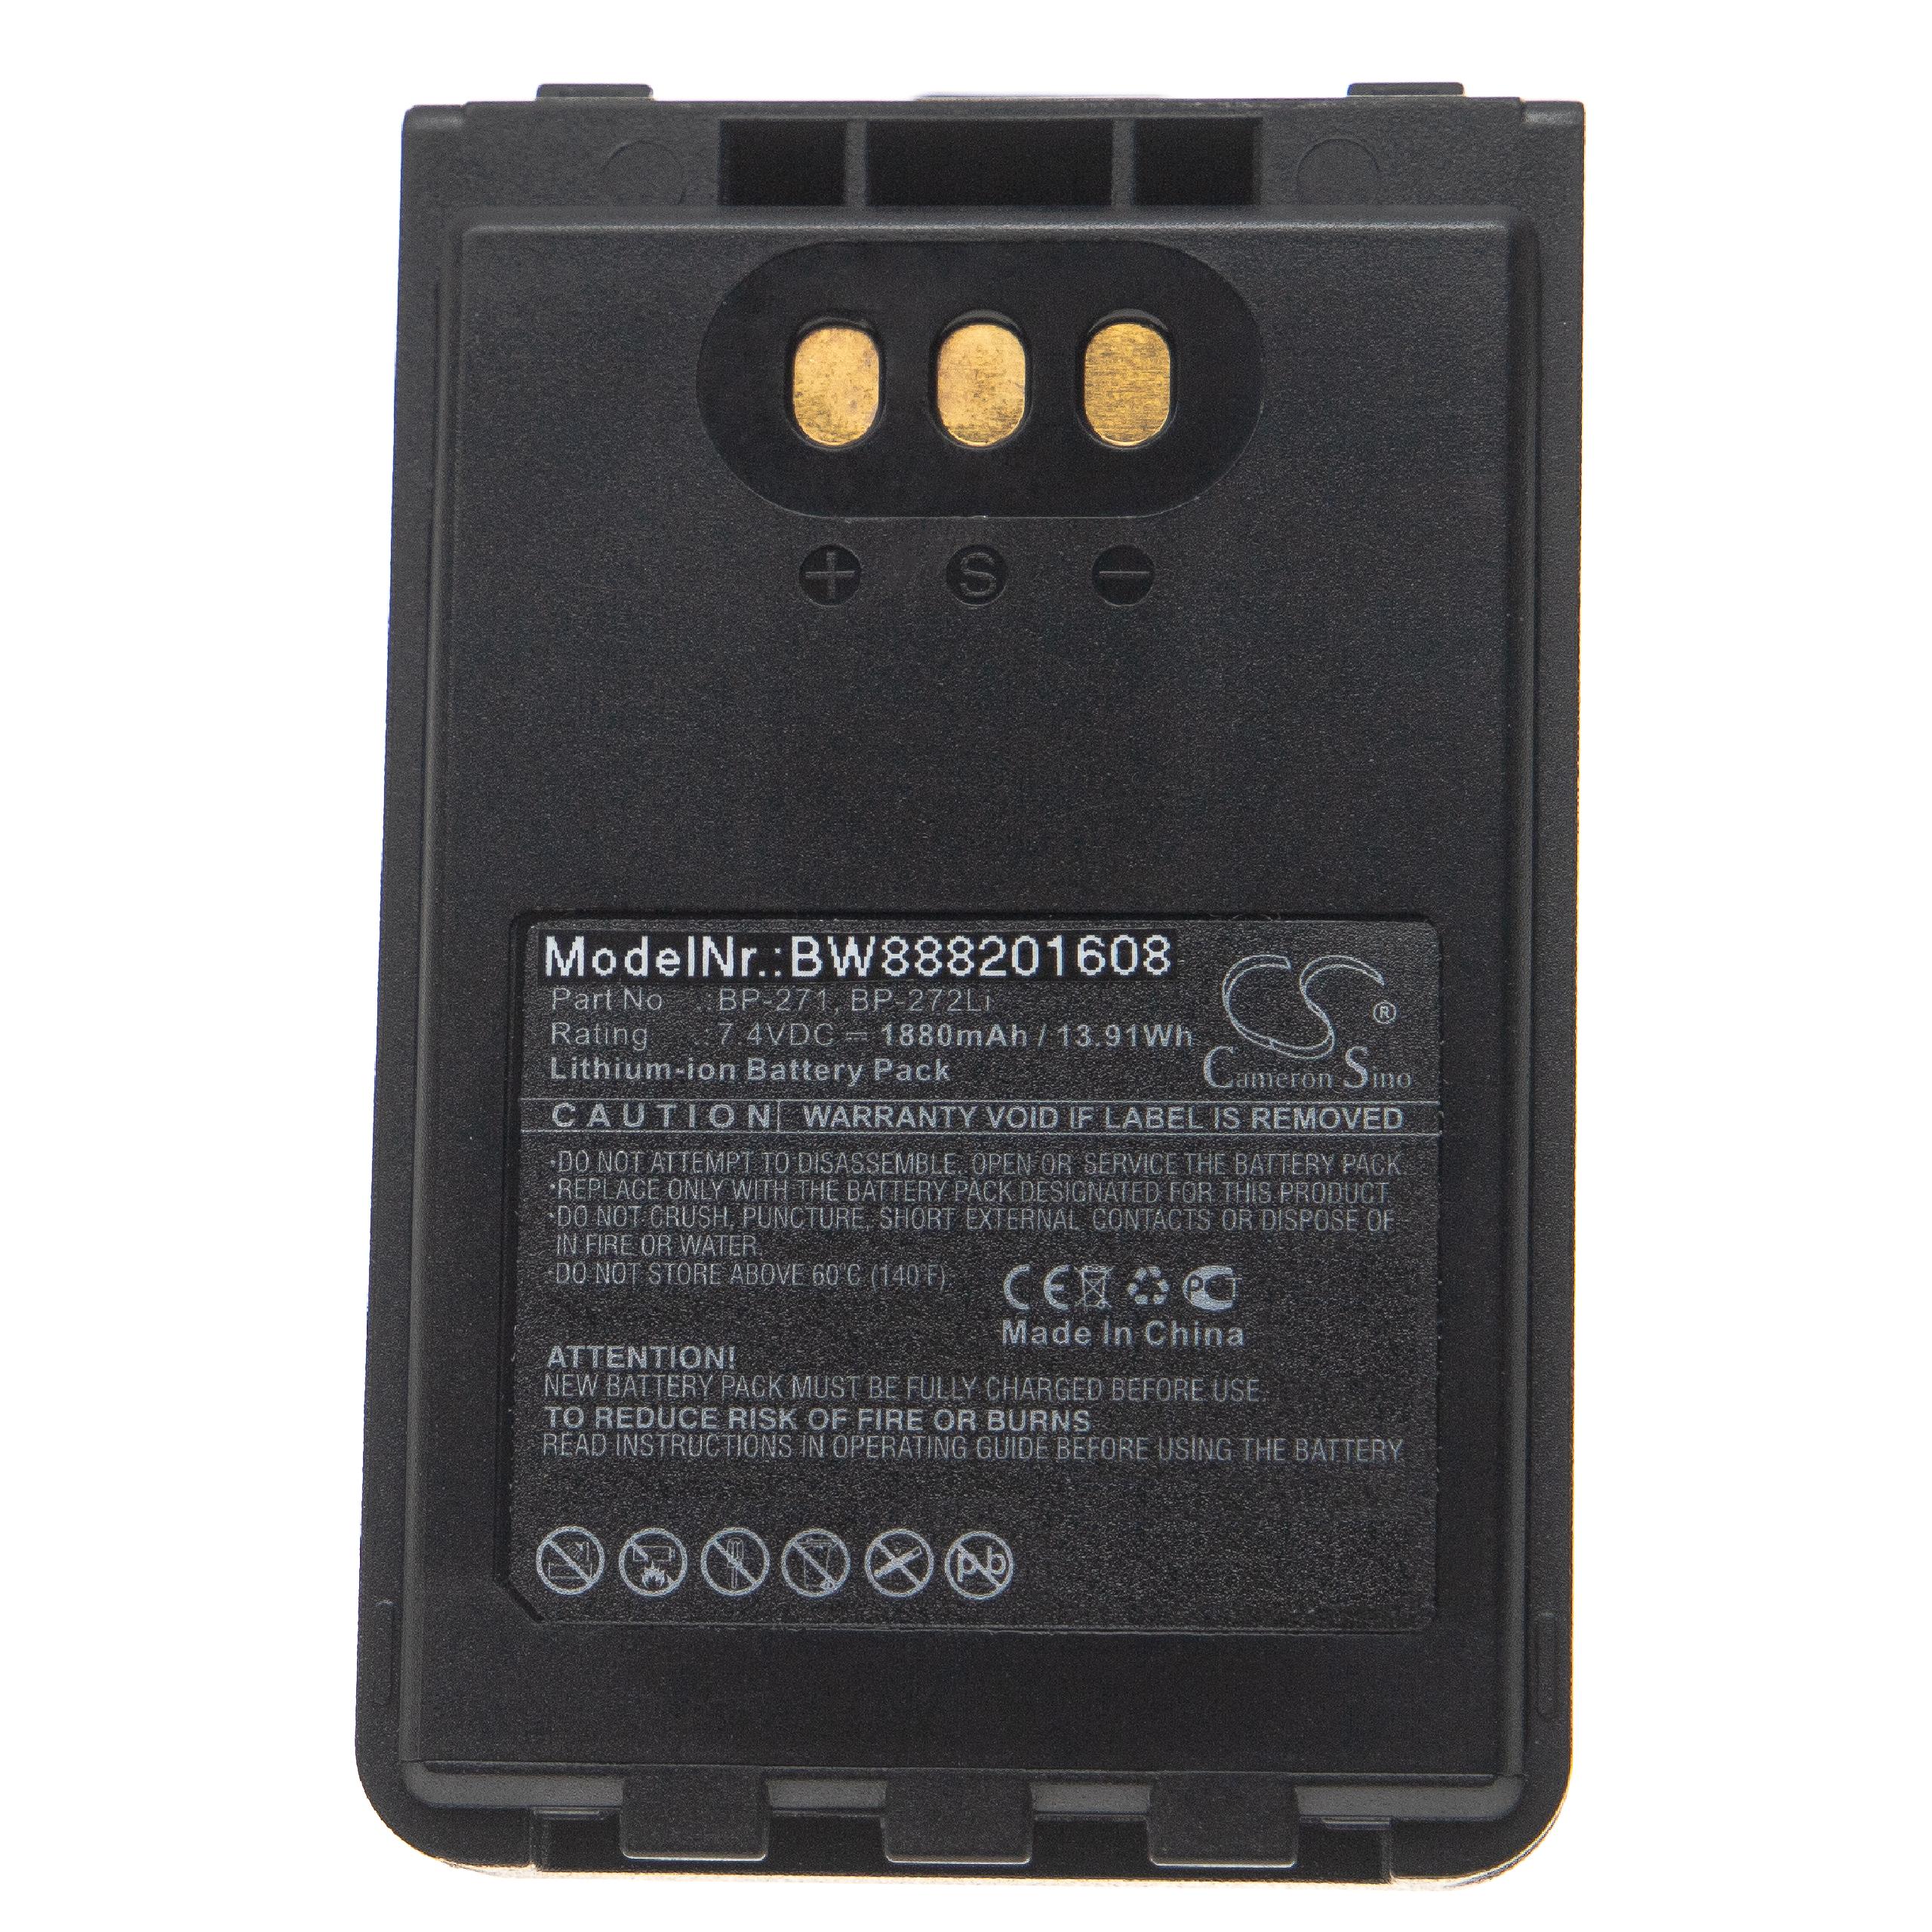 Batterie remplace Icom BP-271, BP-272Li pour radio talkie-walkie - 1880mAh 7,4V Li-ion